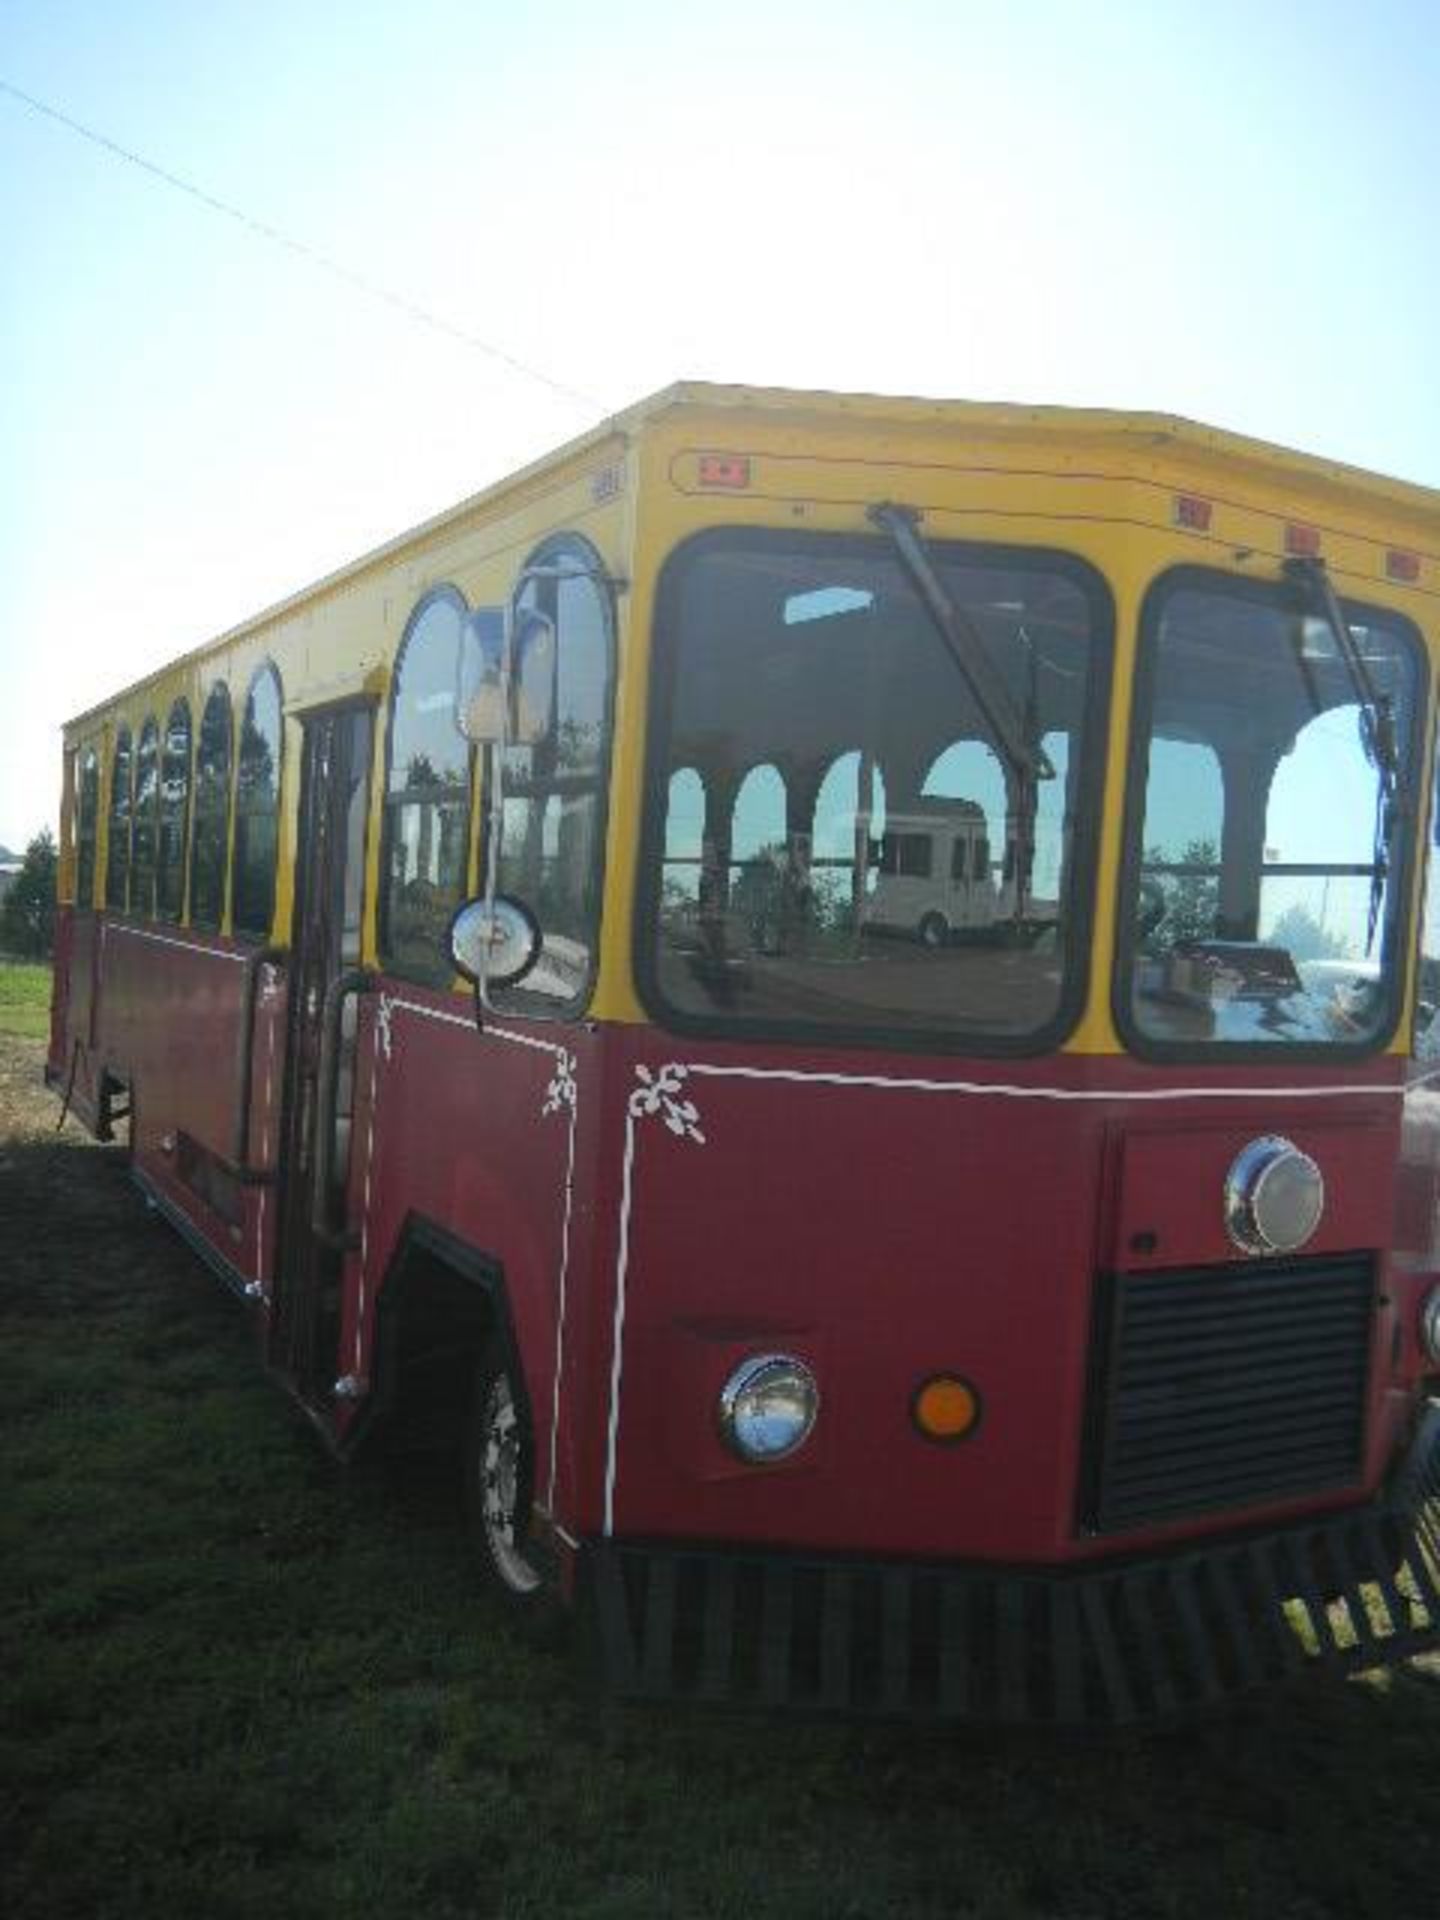 Trolley Bus - Asset I.D. #659 - Last of Vin (T2112598) - Freightliner Chassis - Cummins Diesel